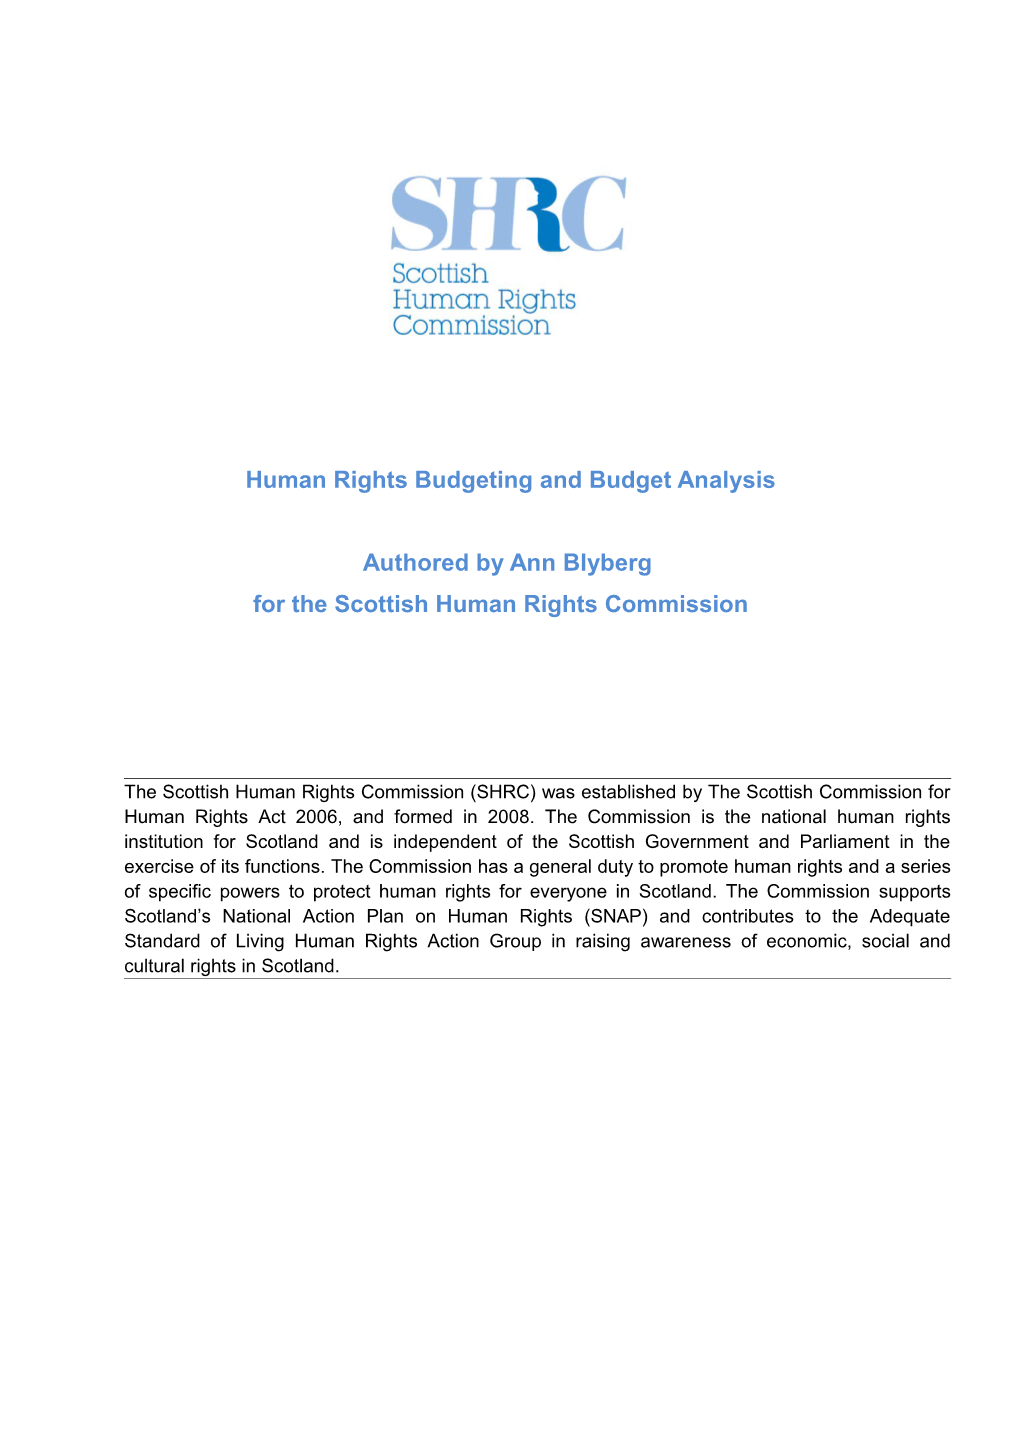 Human Rights Budgeting and Budget Analysis